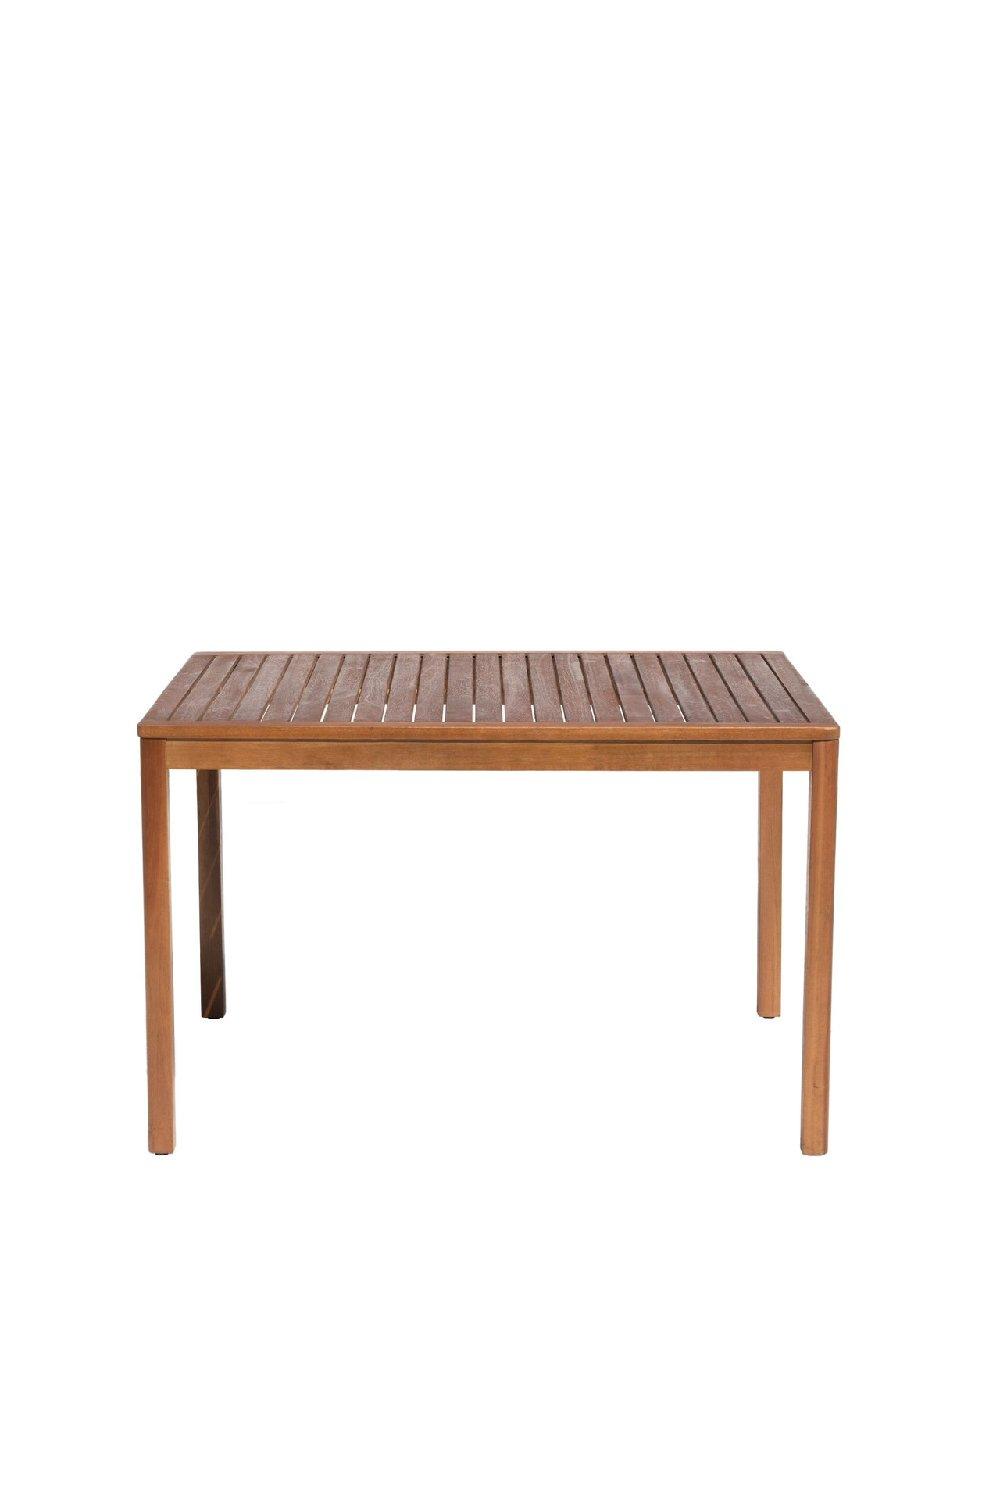 Cali - Wooden Rectangular Table